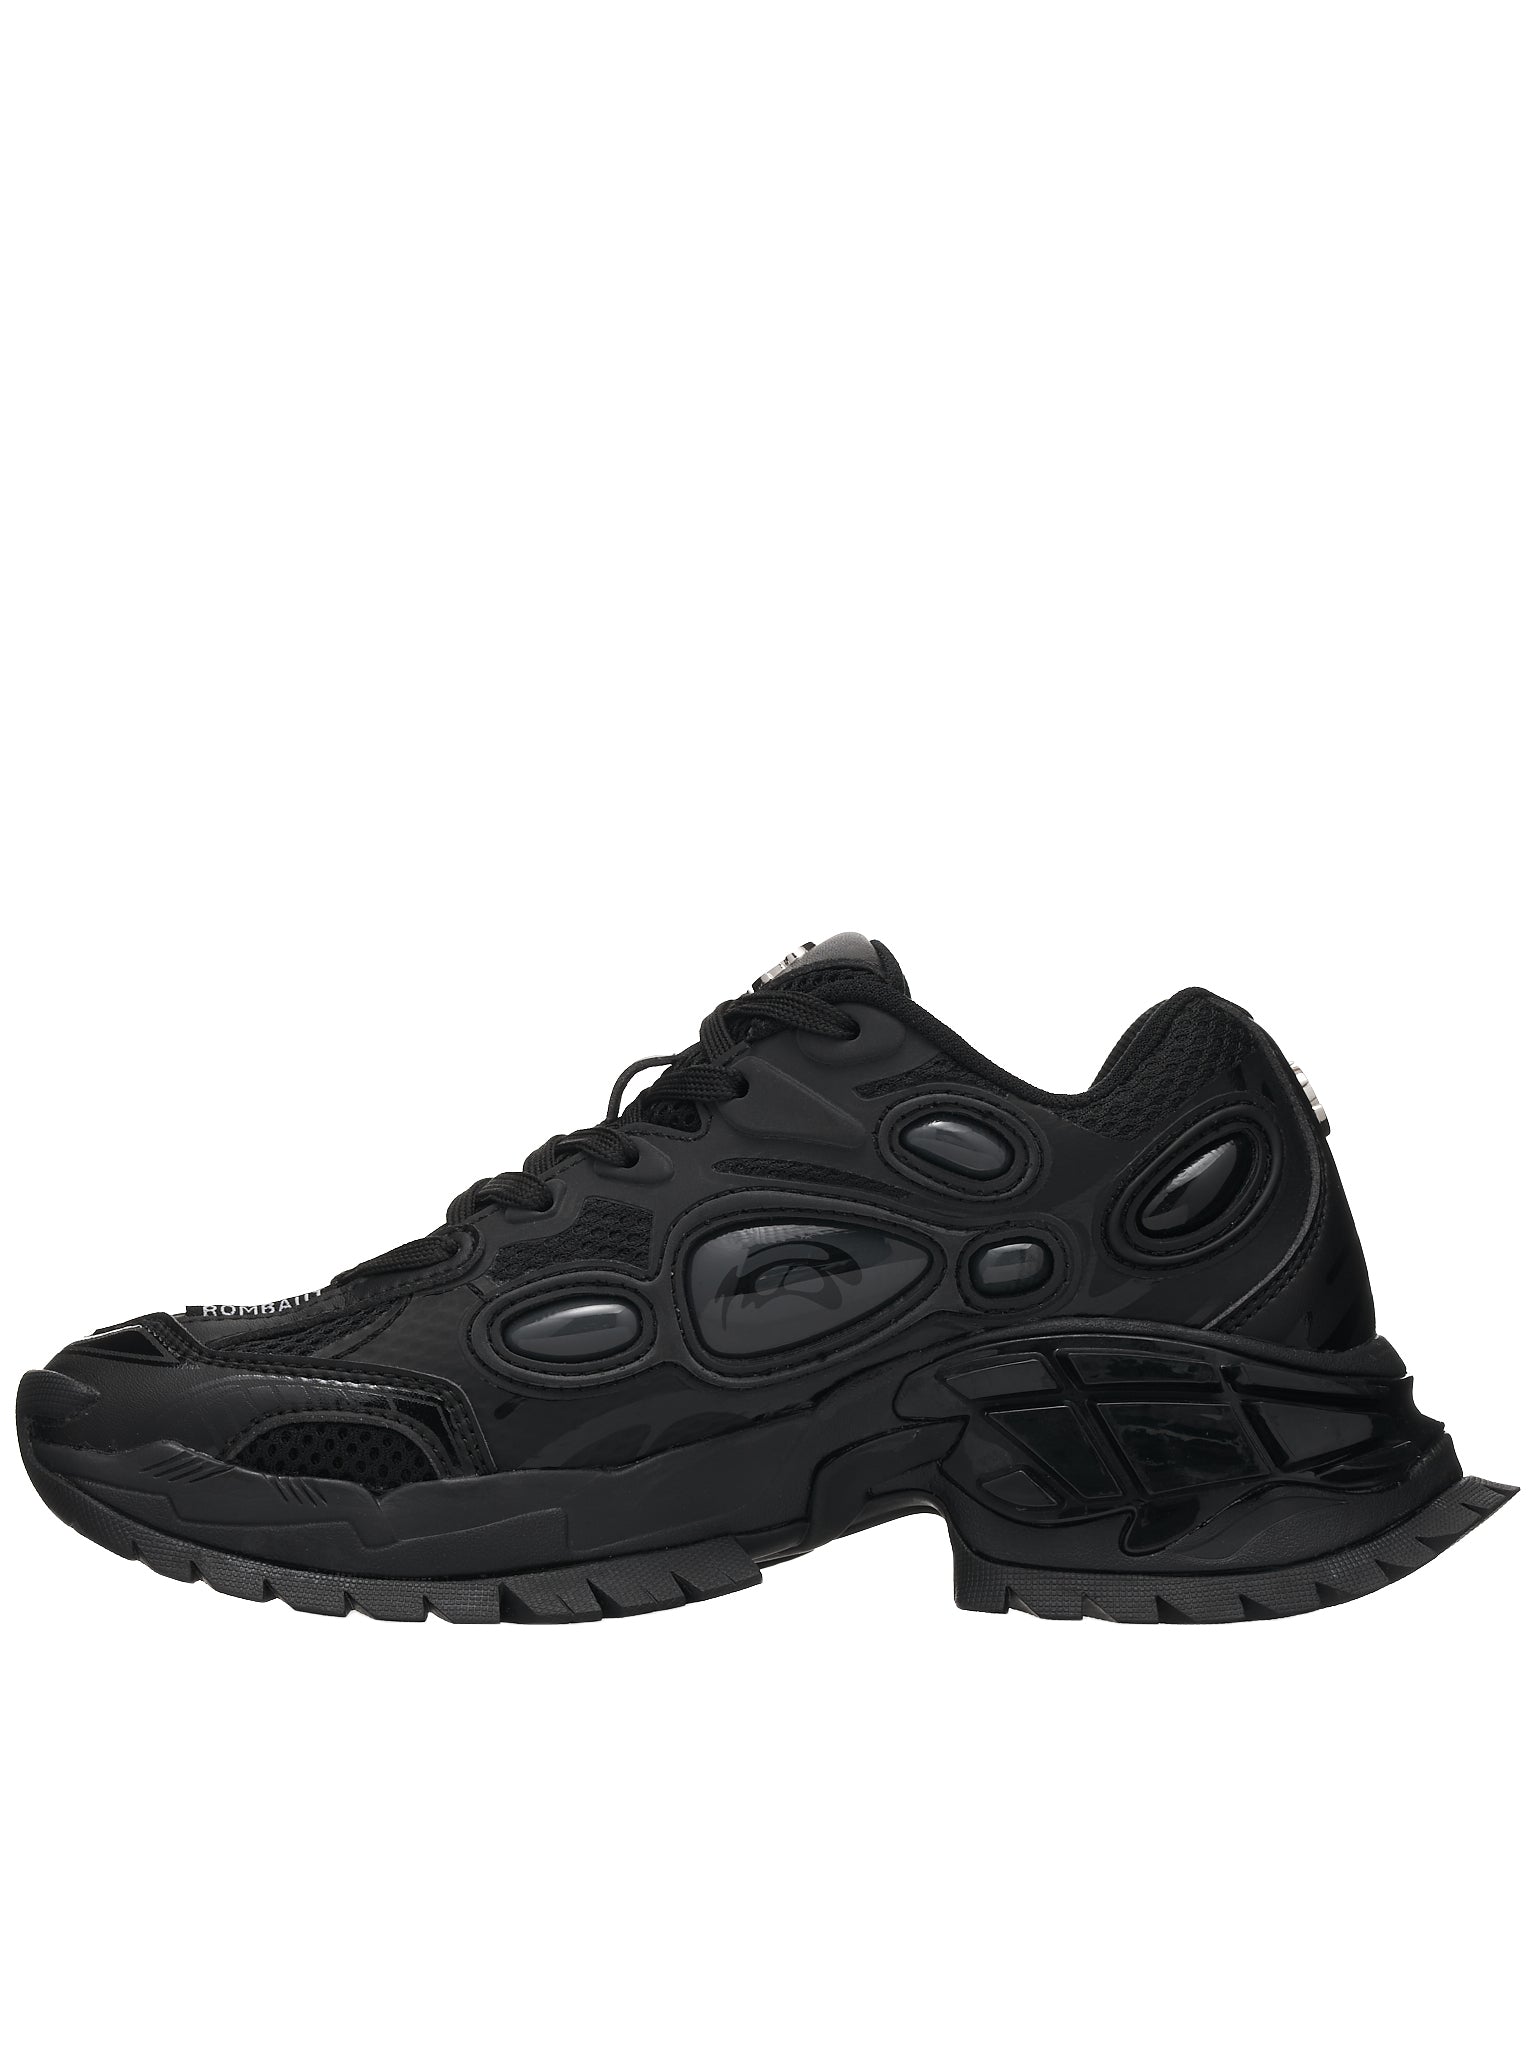 Nucleo Sneakers (E-001-NUCLEO-VOLCANIC-BLACK)